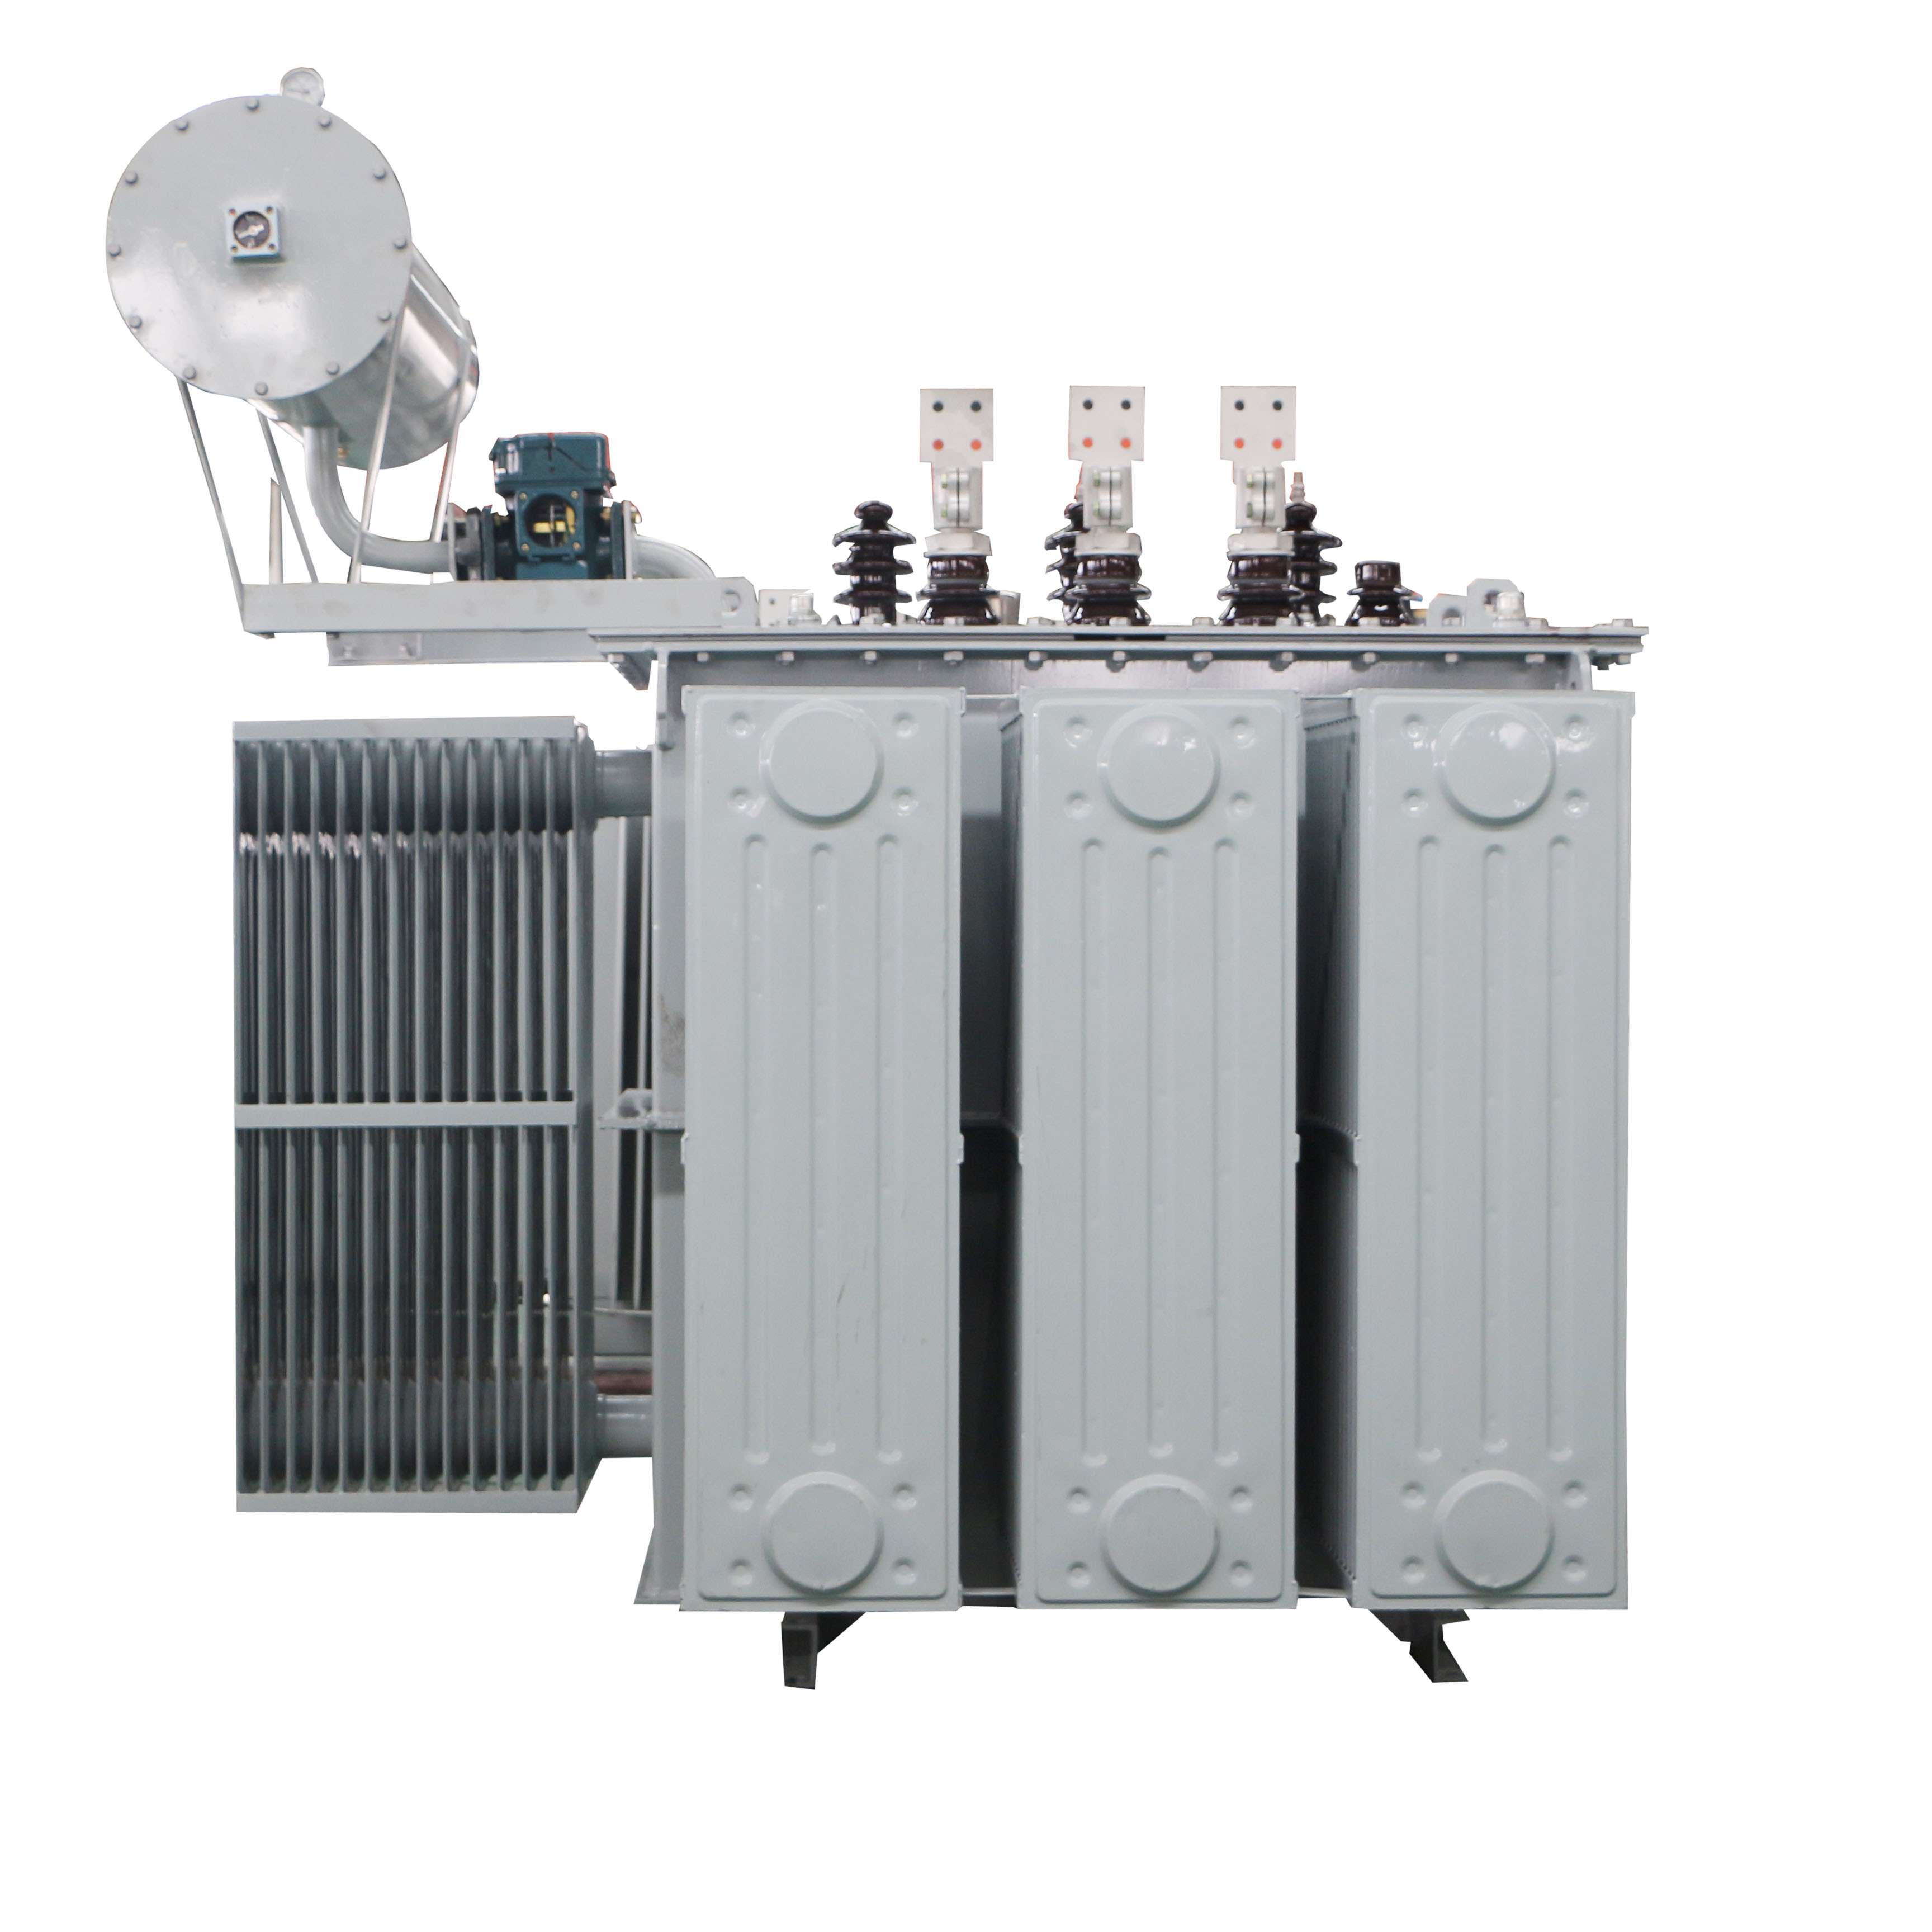 ODM Discount Distribution Transformer Manufacturers Quotes –  11kV  On load power transformer – JSM TRANSFORMER